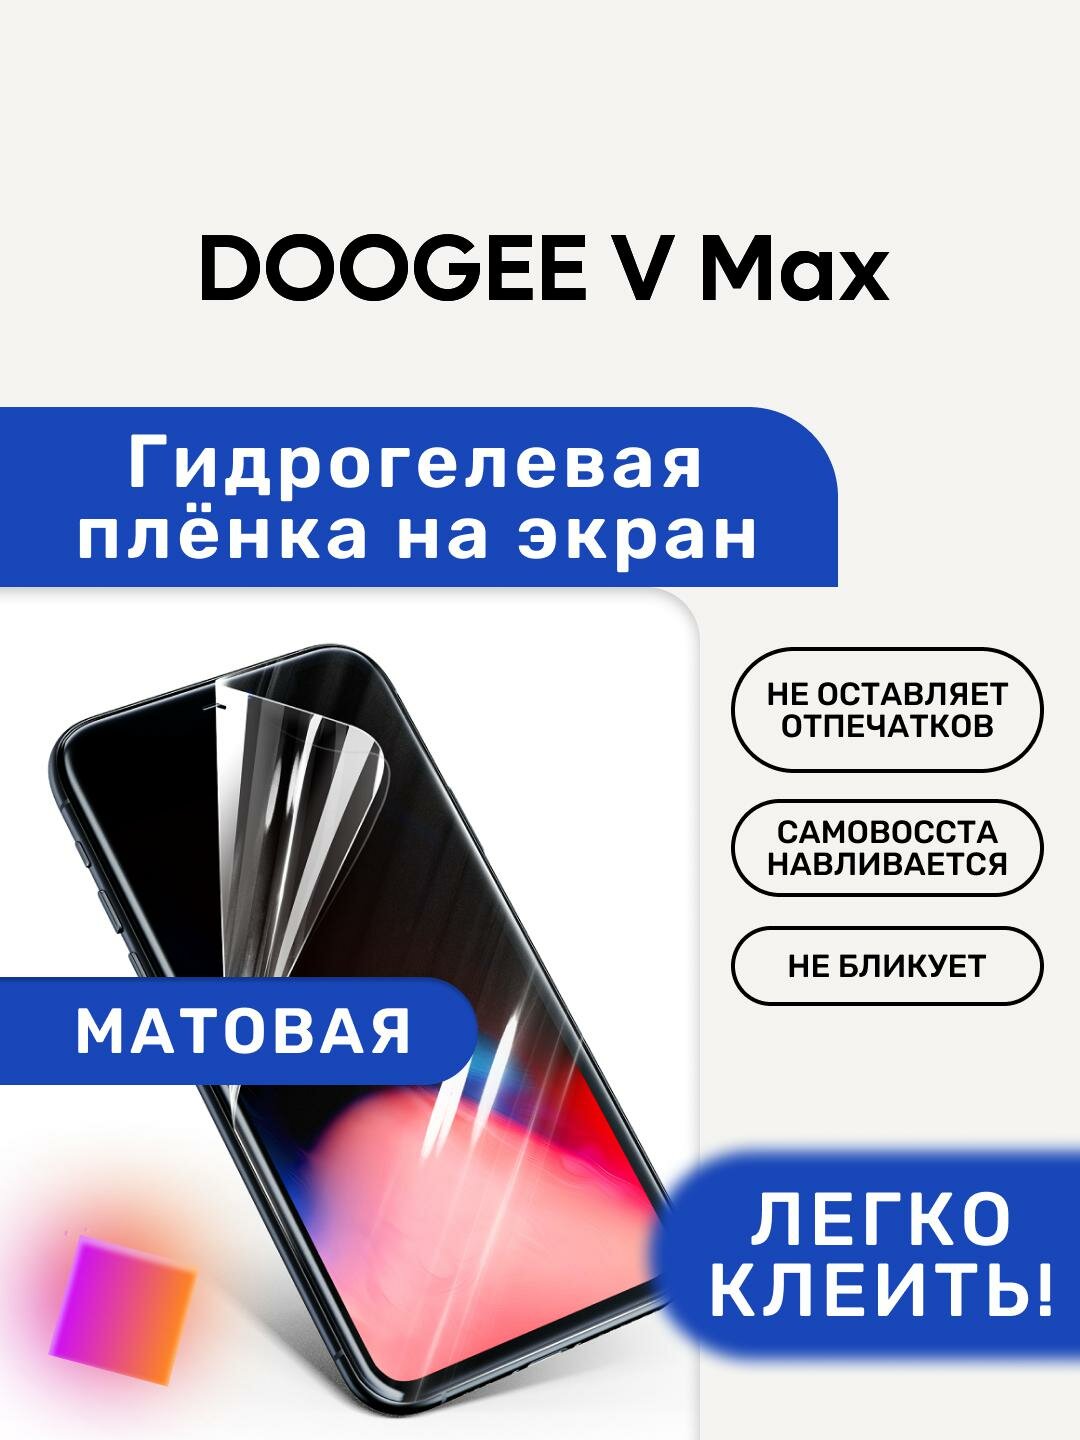 Матовая Гидрогелевая плёнка полиуретановая защита экрана DOOGEE V Max